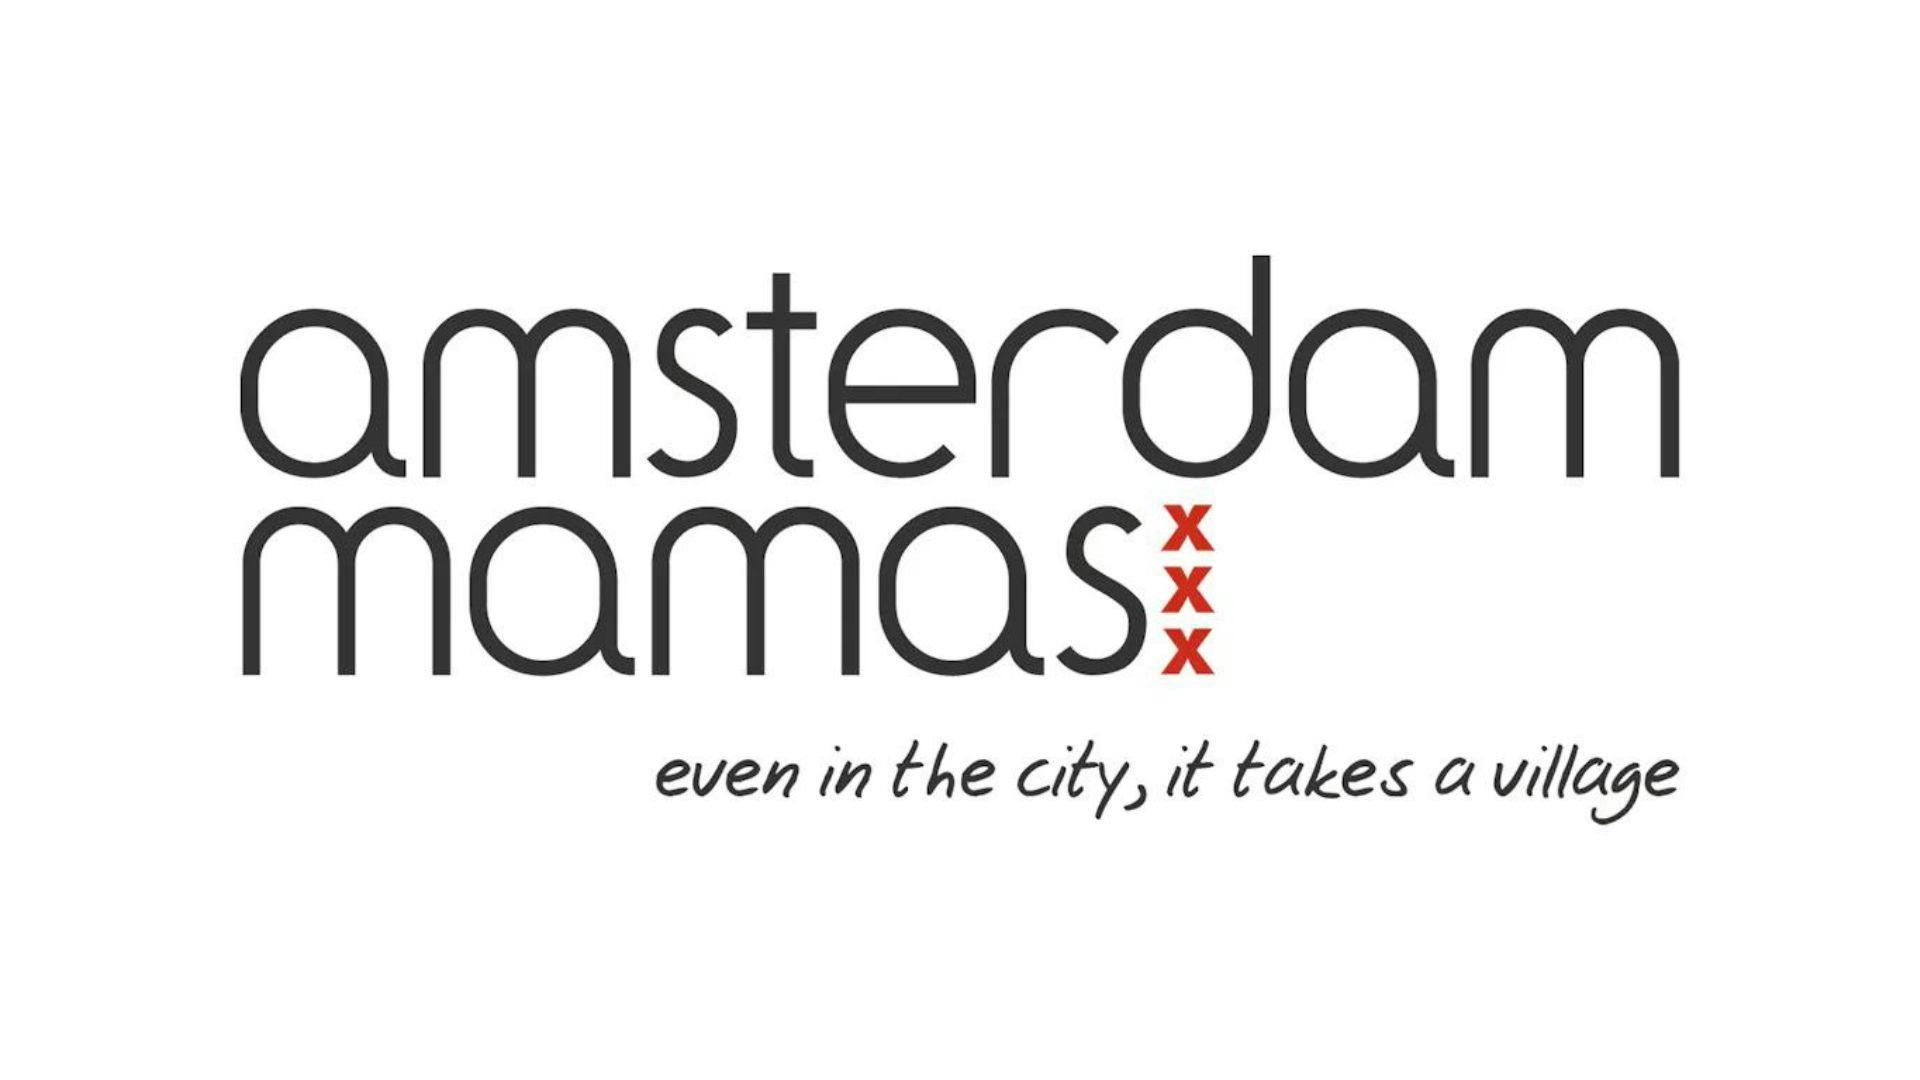 Amsterdam Mamas